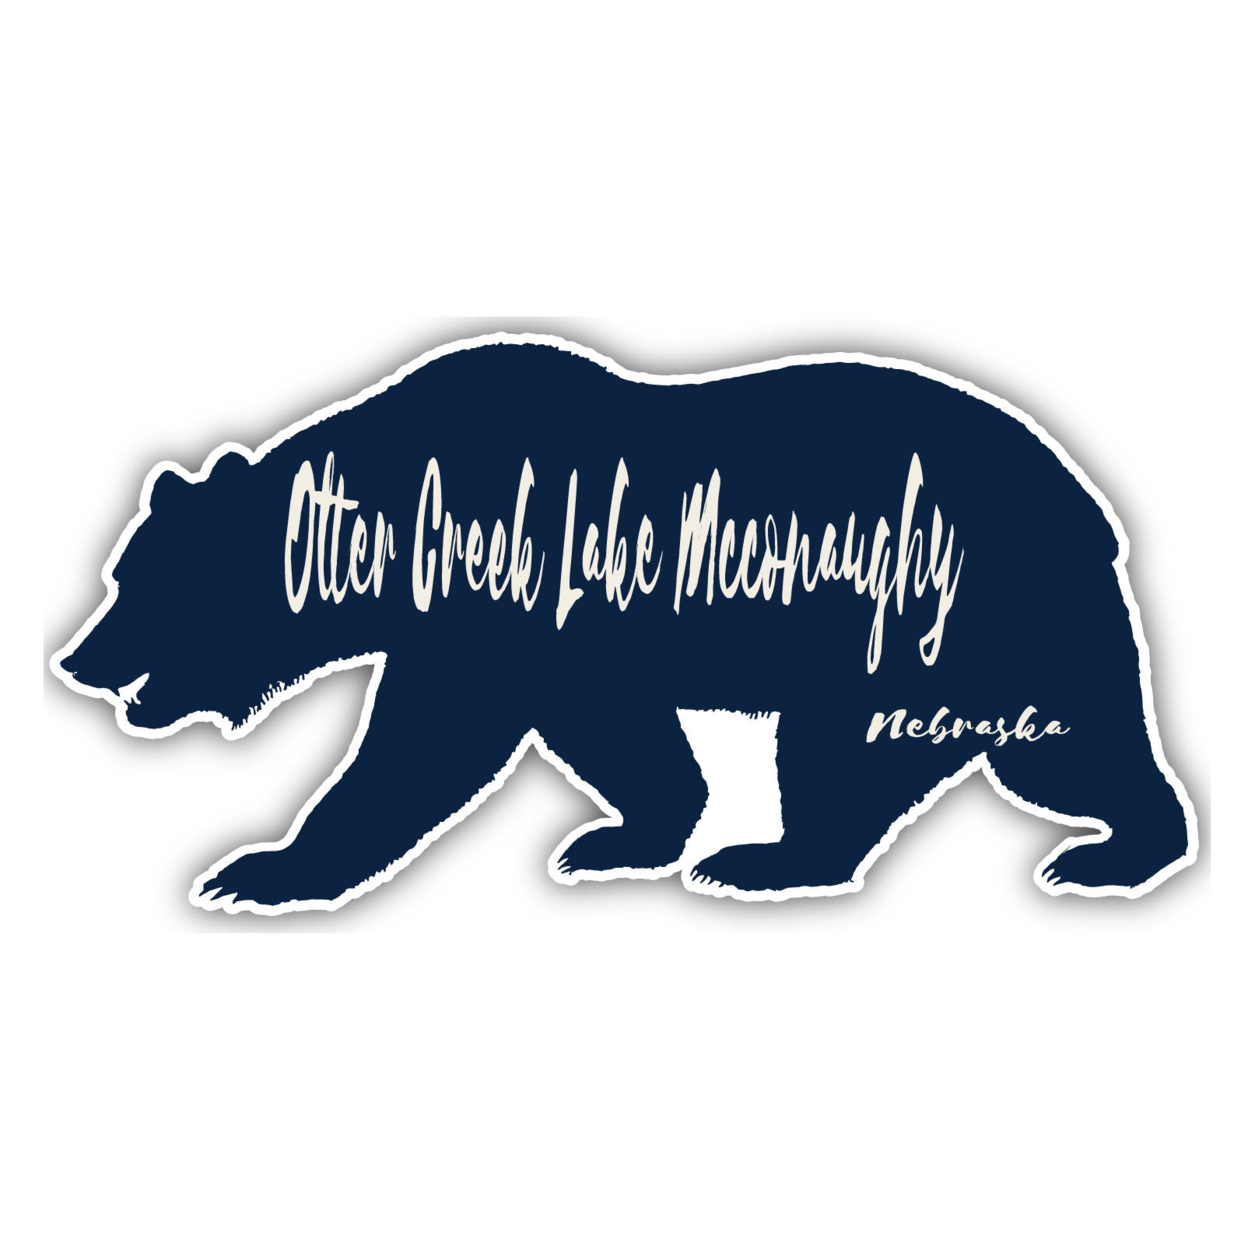 Otter Creek Lake Mcconaughy Nebraska Souvenir Decorative Stickers (Choose Theme And Size) - Single Unit, 4-Inch, Bear